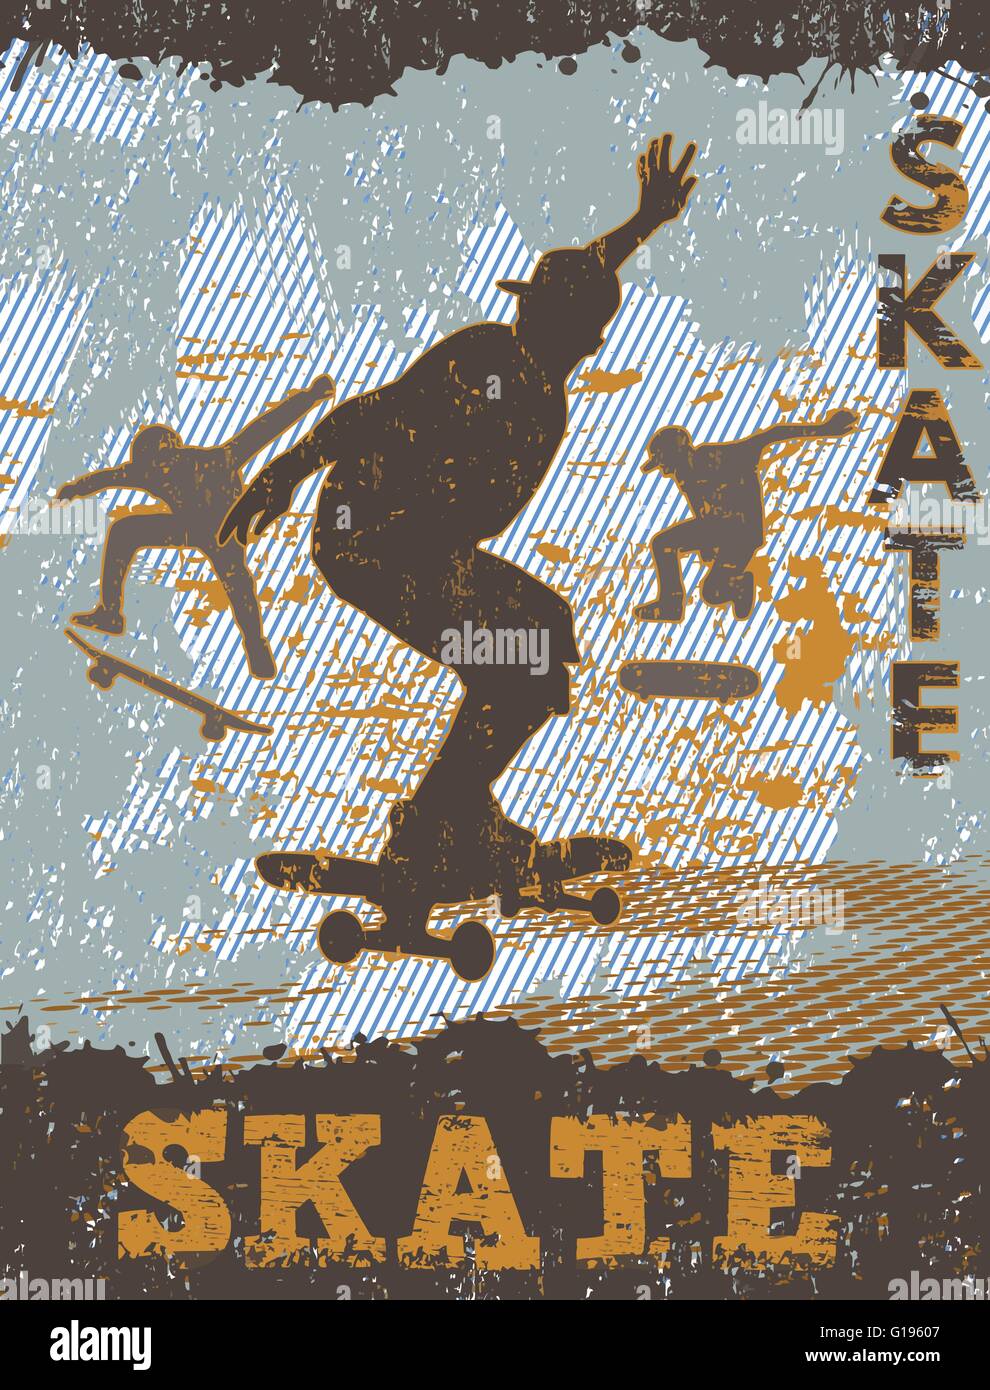 Vintage skating poster Banque d'images vectorielles - Alamy